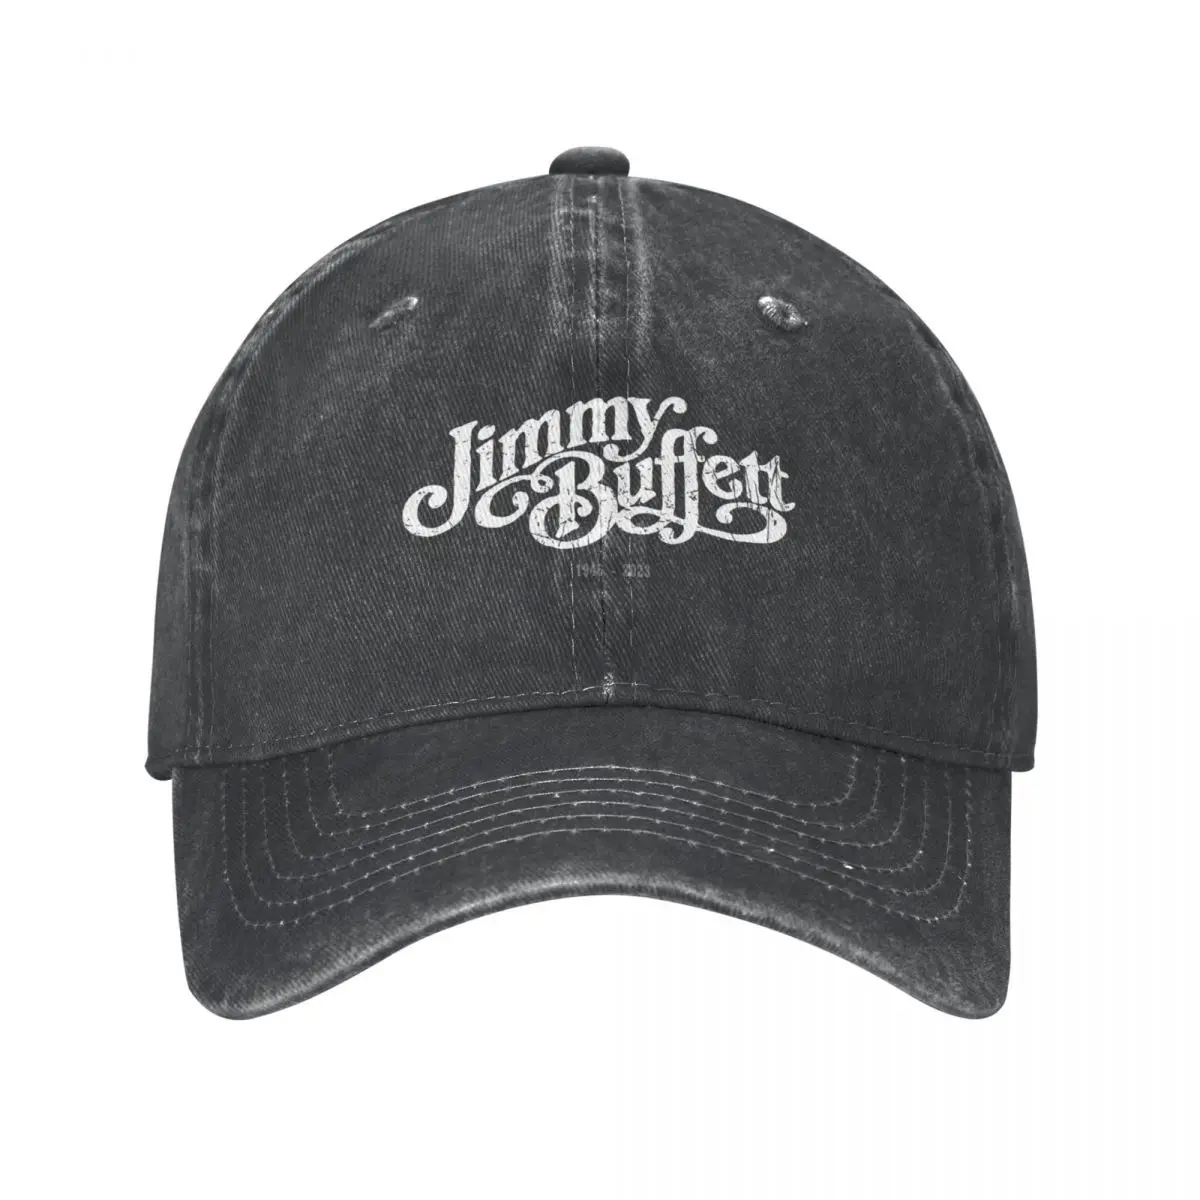 

Musician Jimmy Buffett Baseball Cap Fashion Distressed Denim Washed Sun Cap for Men Women Outdoor Activities Caps Hat